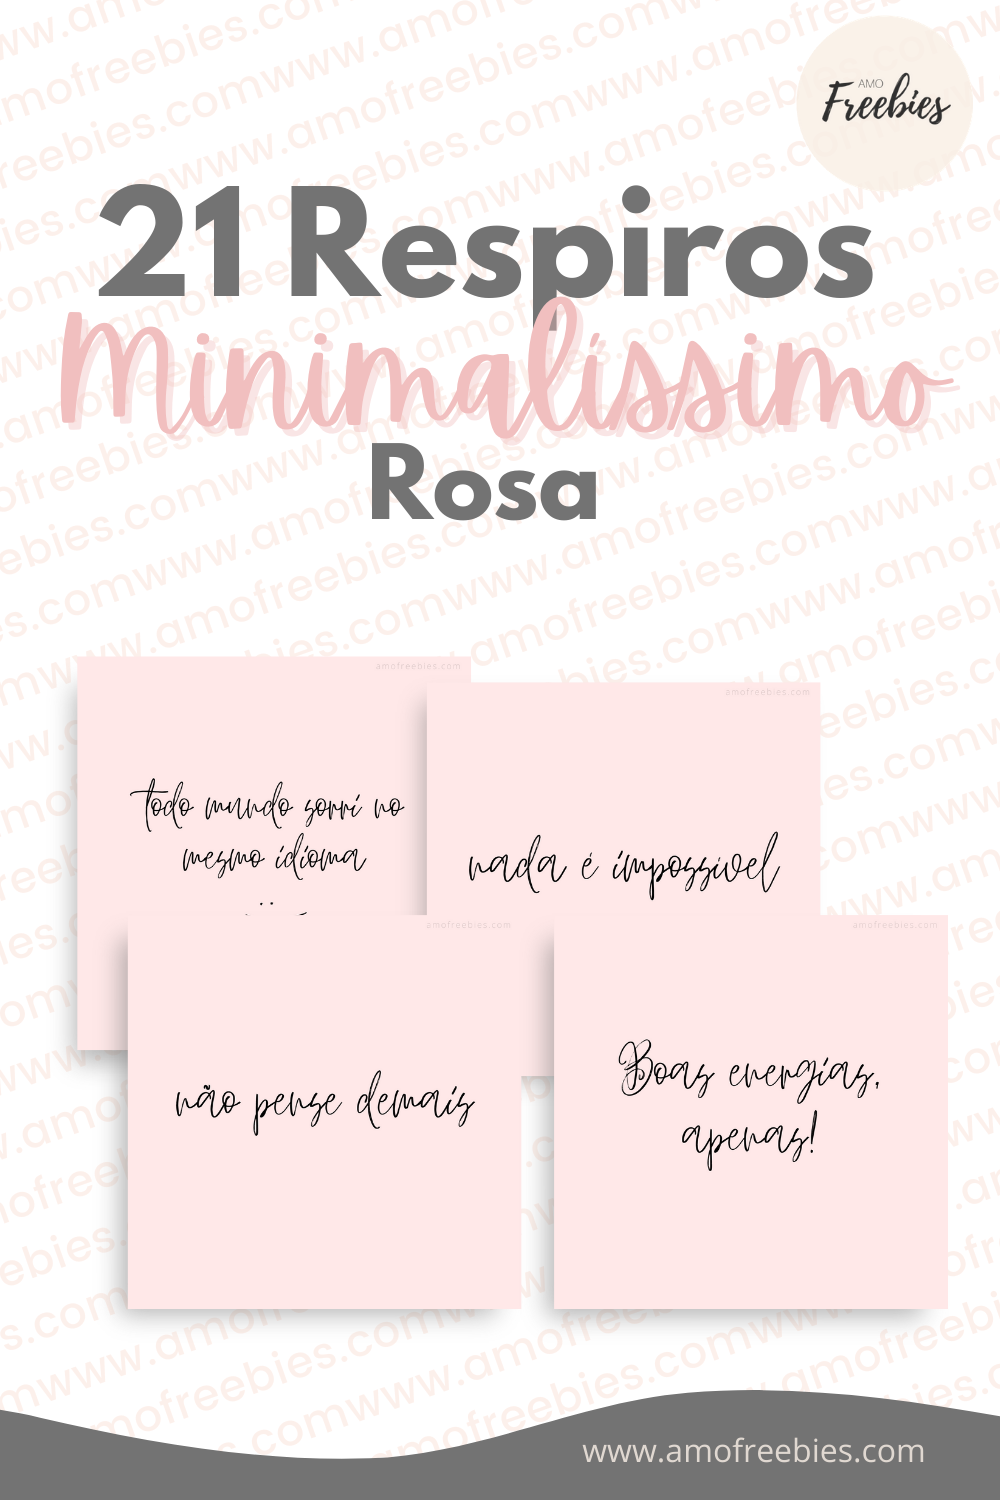 Como Organizar o Feed do Instagram: 21 Respiros Grátis para Download (Minimalíssimo Rosa)